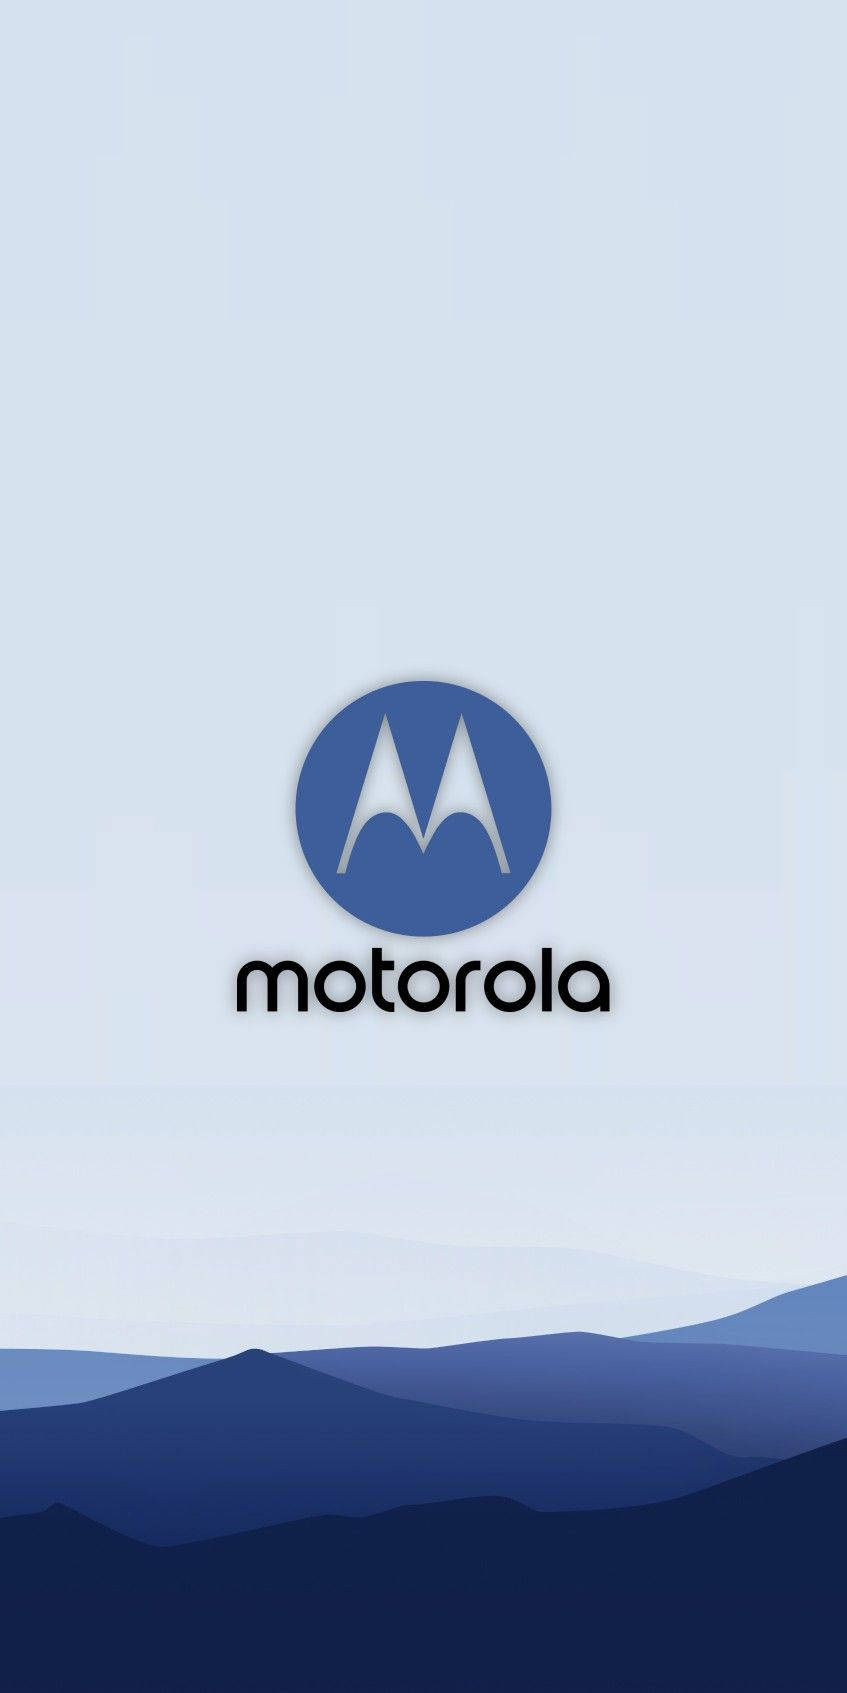 Motorola Vector Art Wallpaper